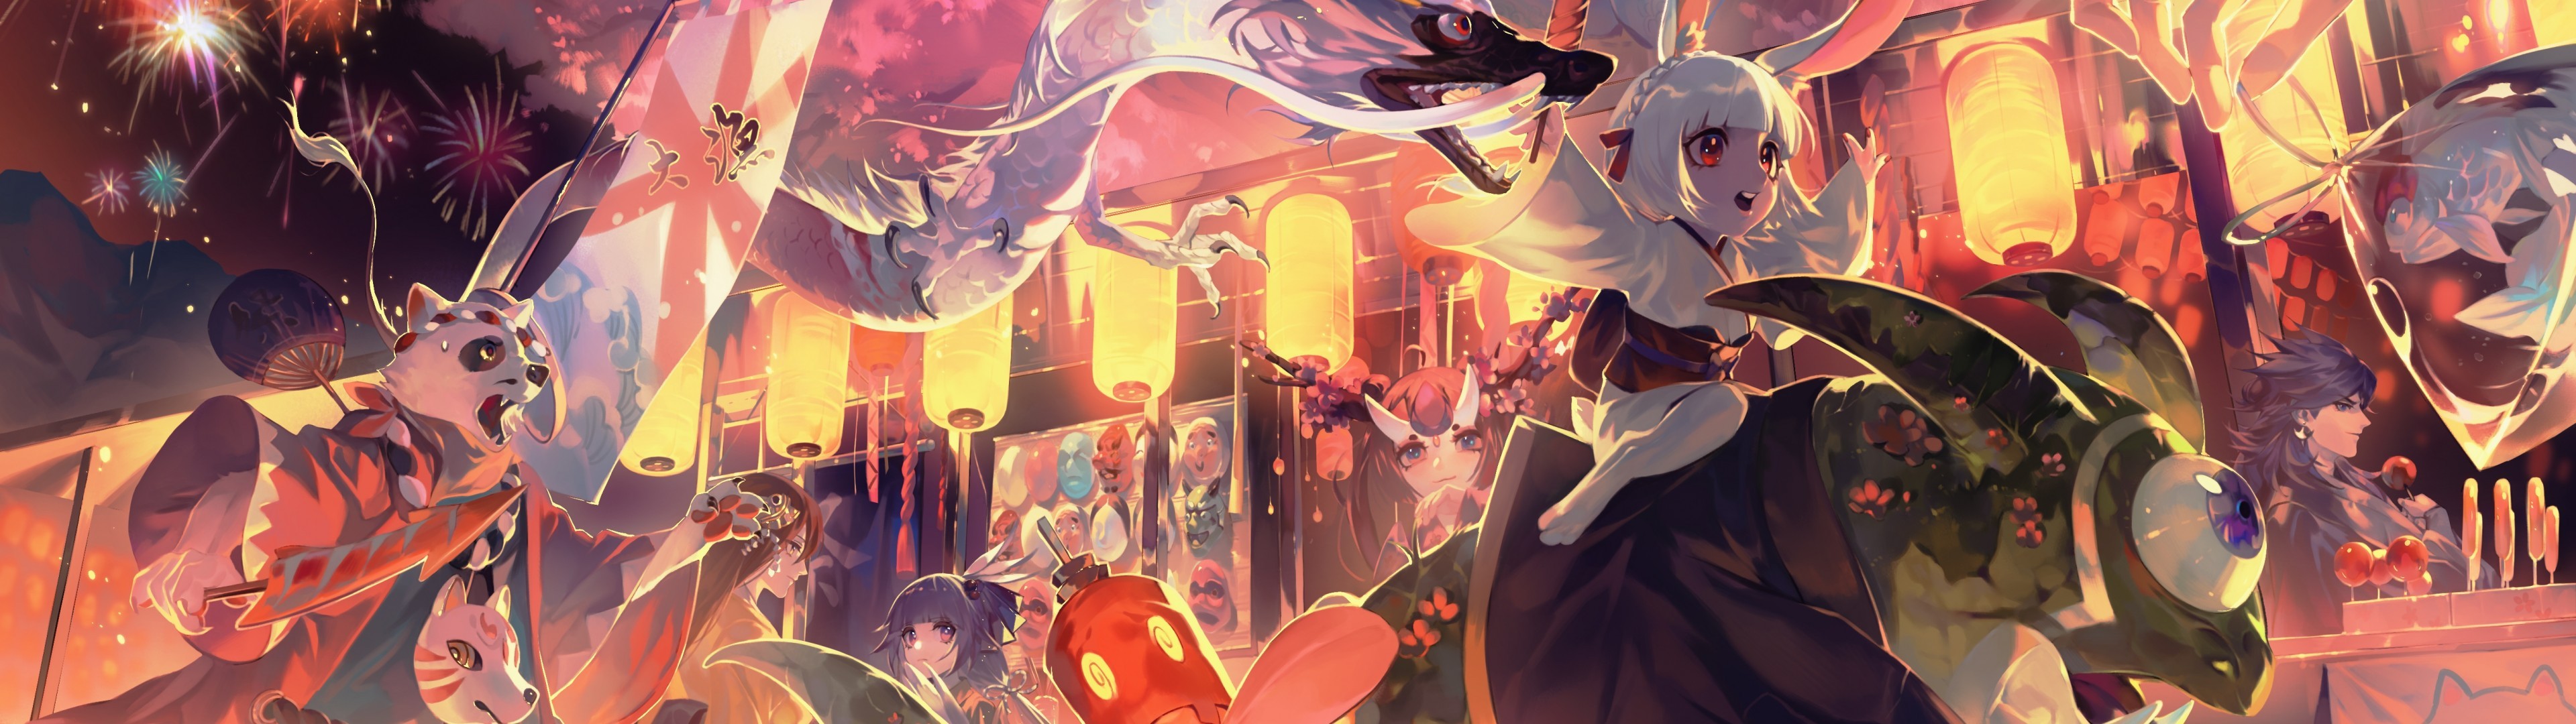 Onmyouji, Fantasy World, Anime Girl, Dragon, Monsters, - Anime Fantasy World Mountain - HD Wallpaper 